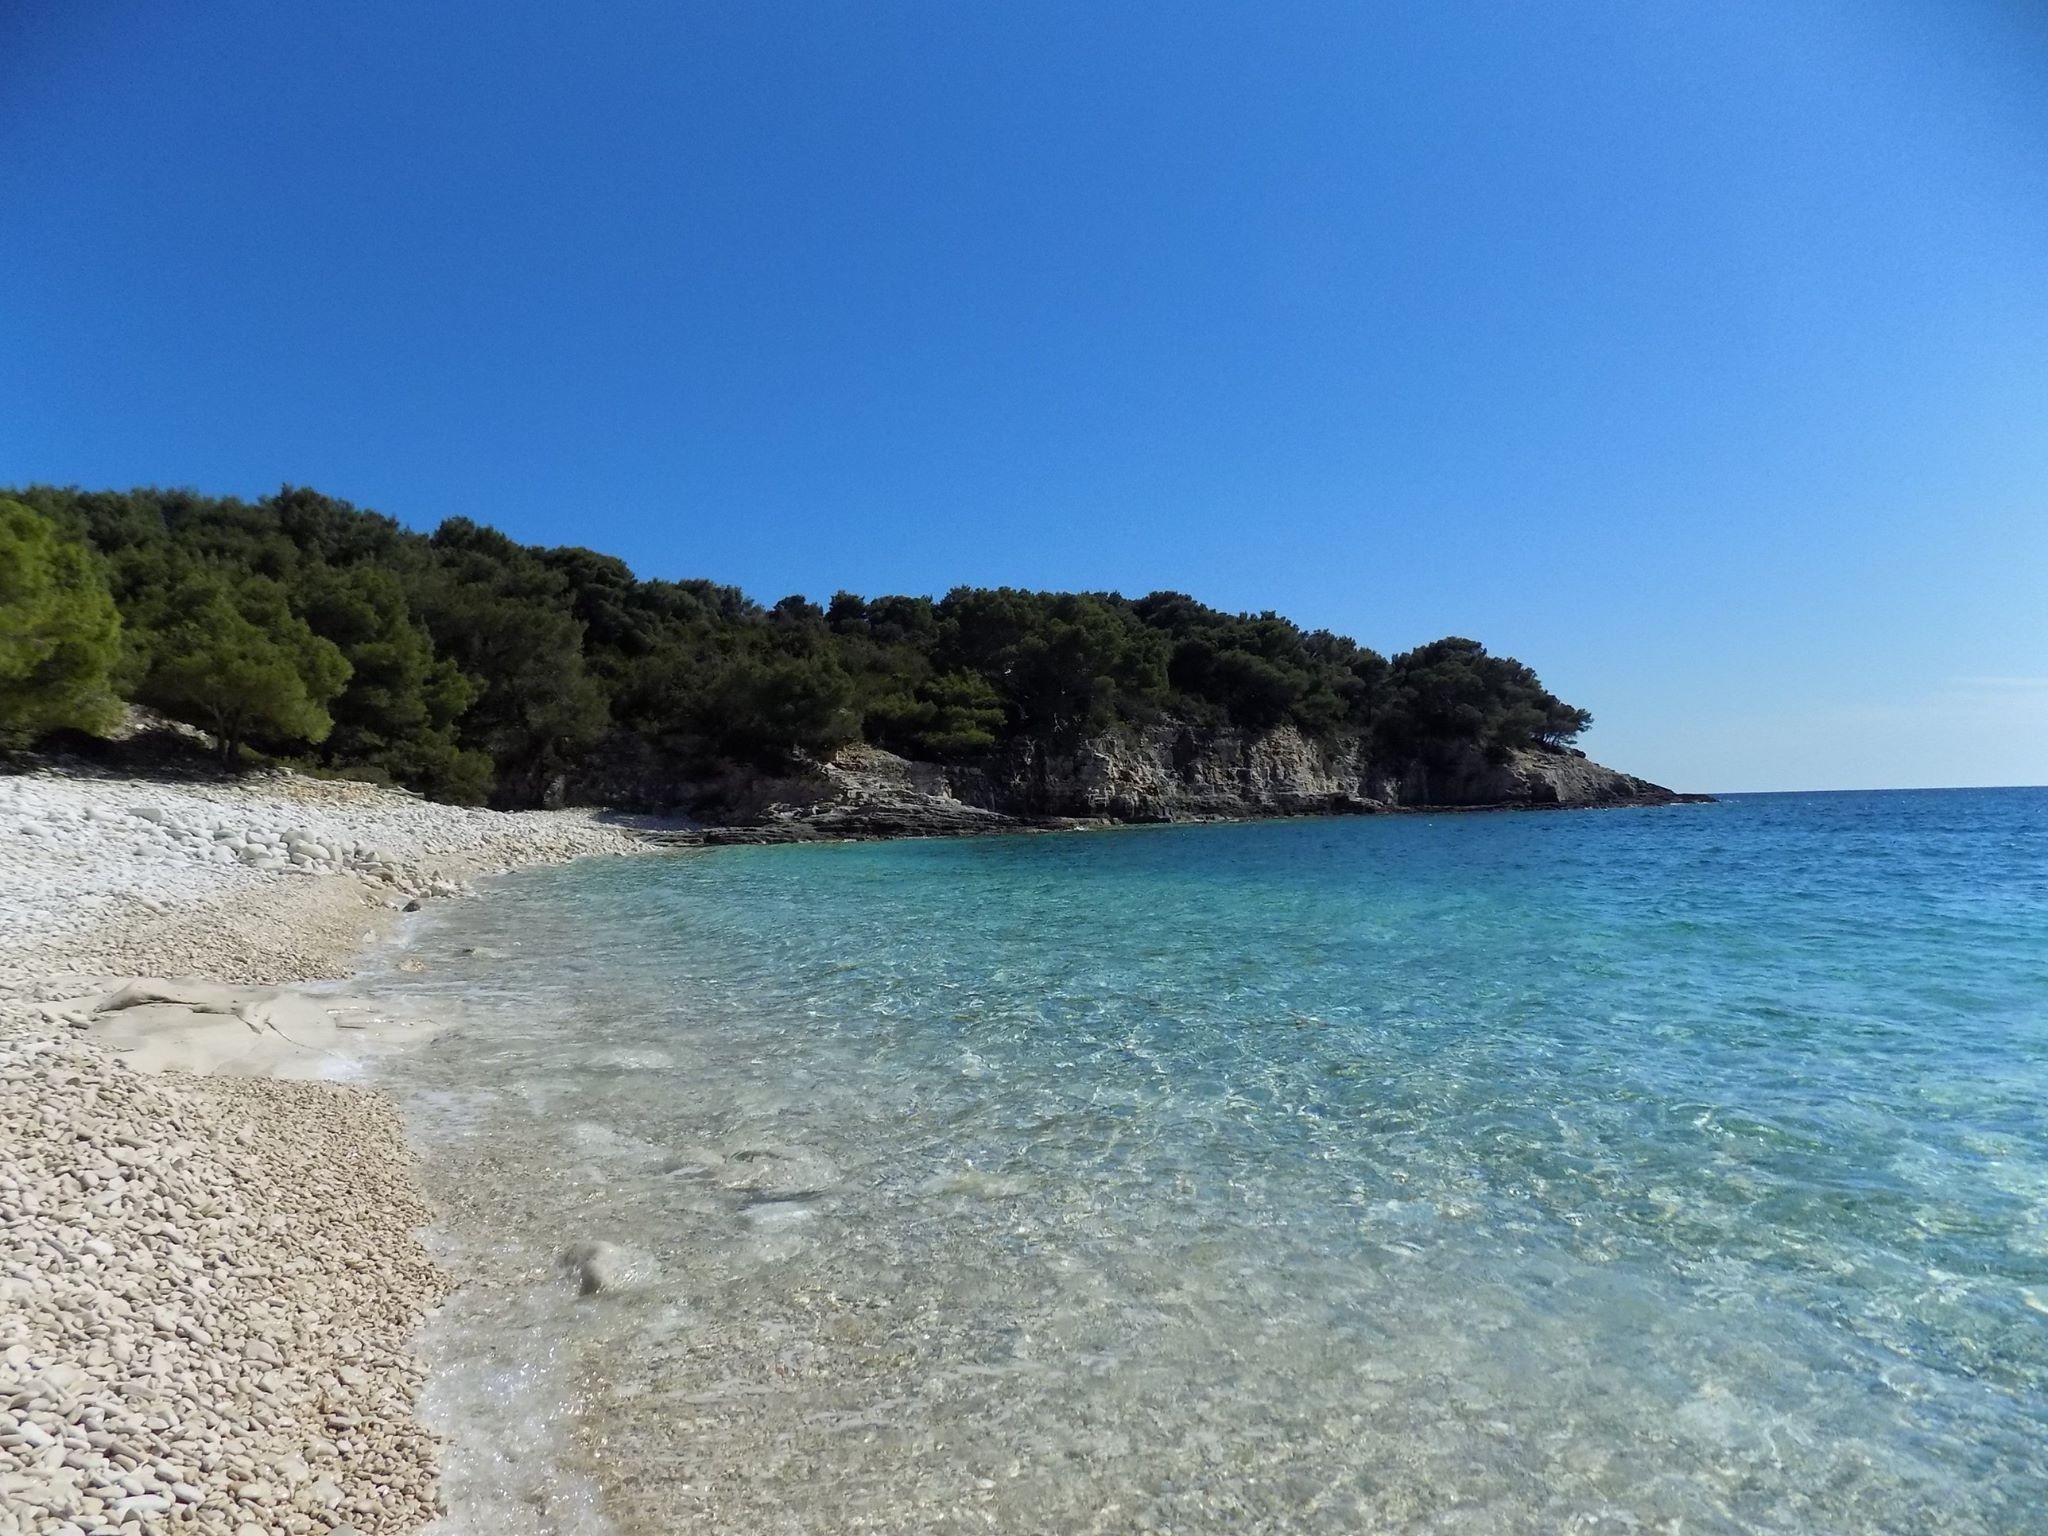 General 2048x1536 beach nature sea Croatia outdoors water